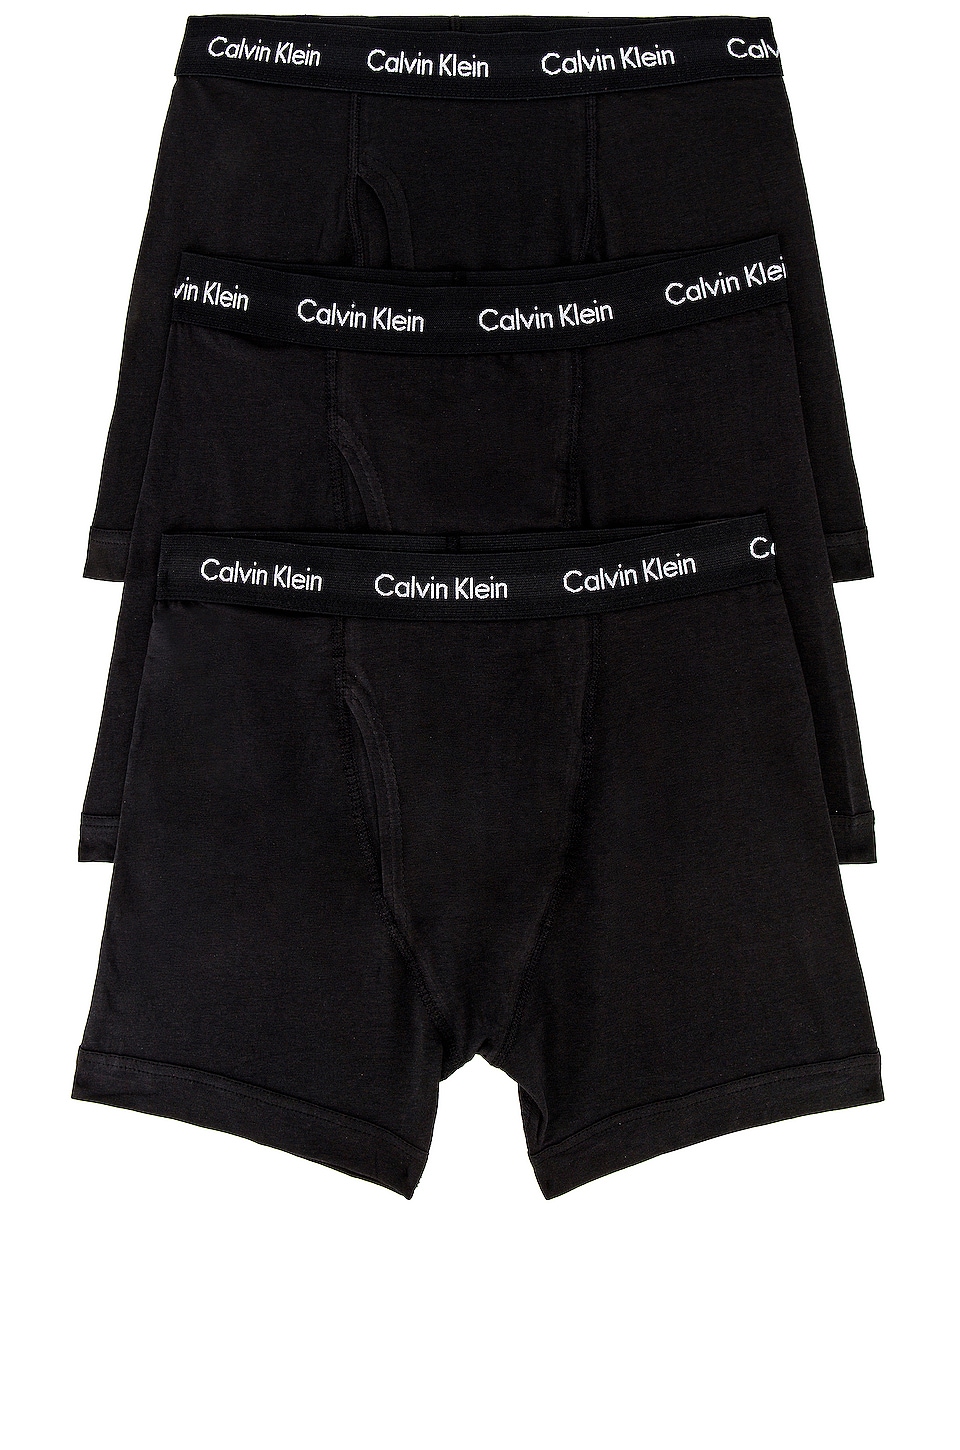 Calvin Klein Boxer Brief 3 Piece Set